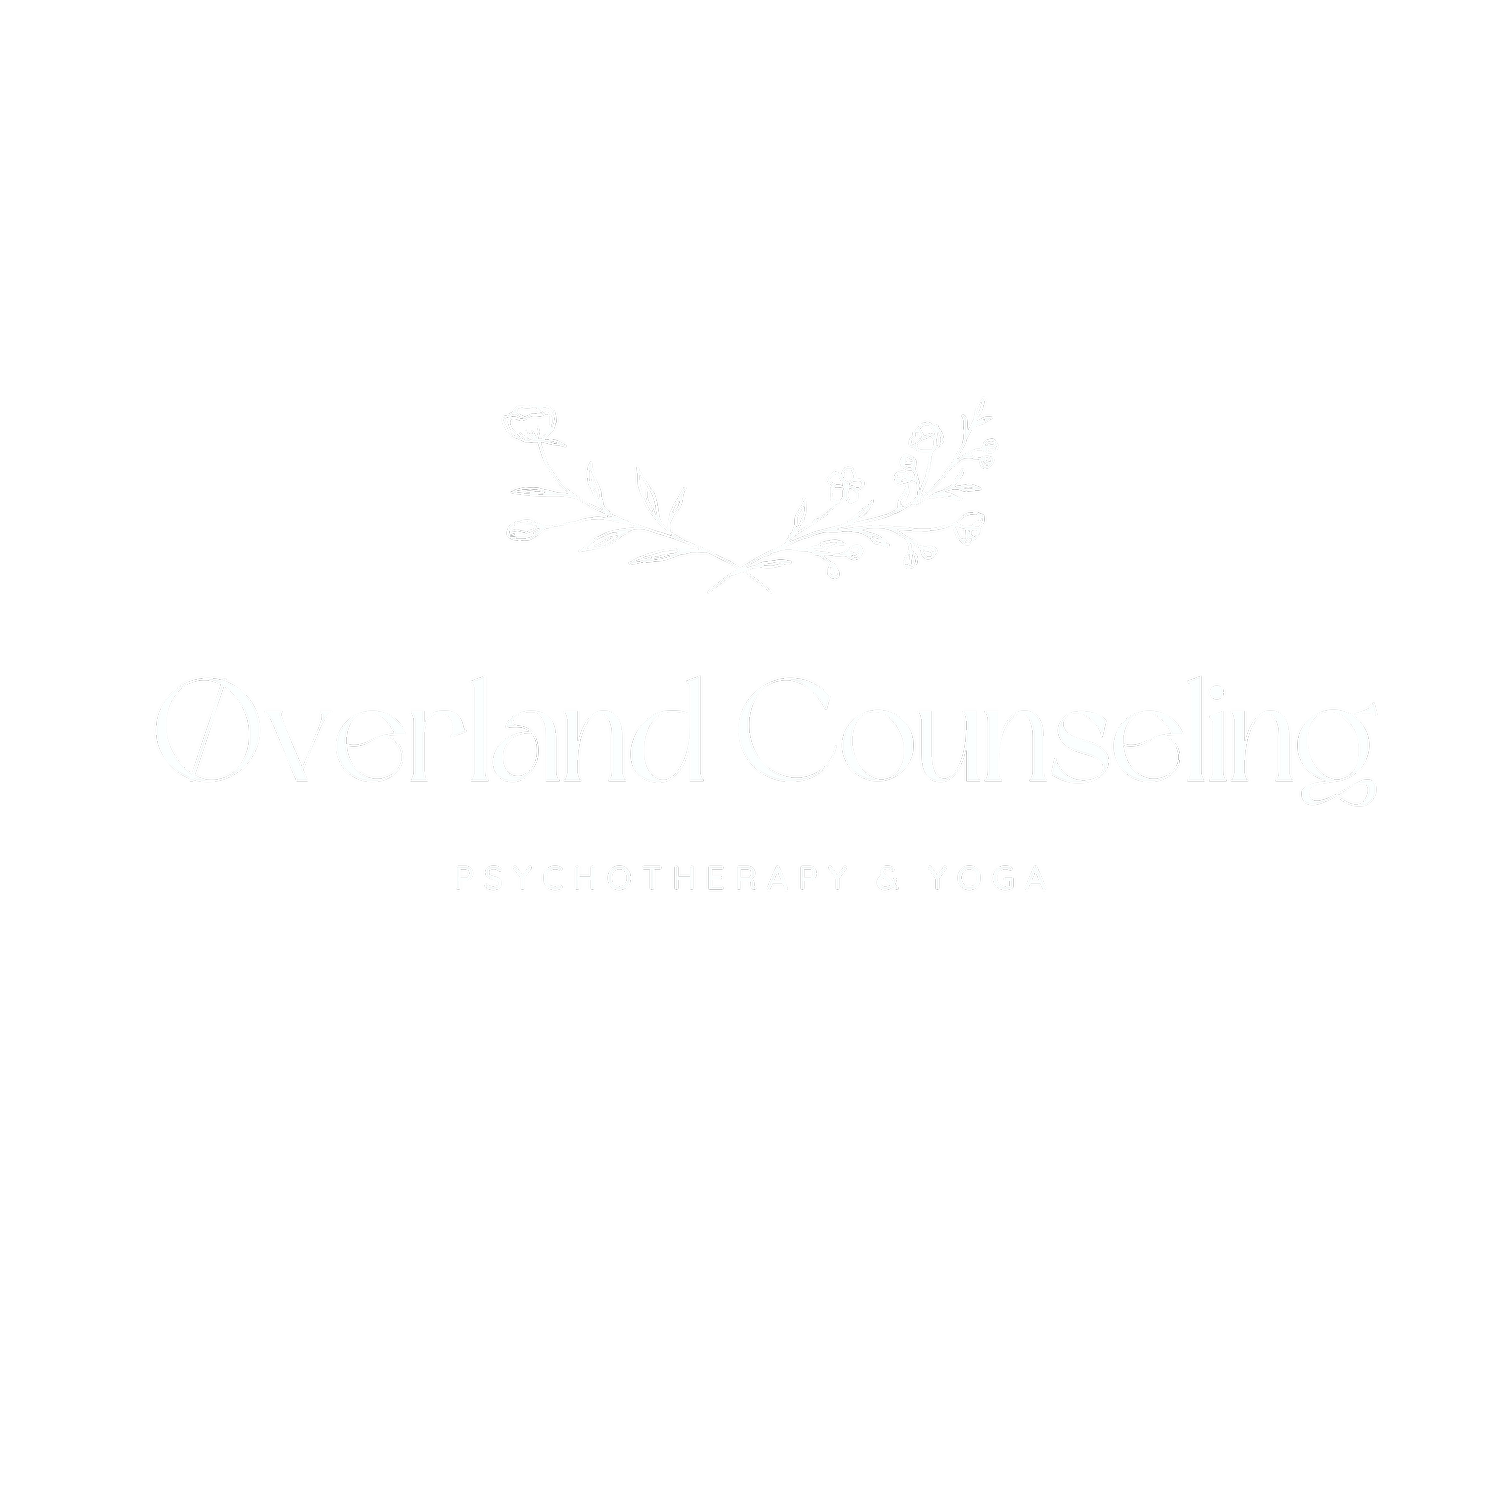 Øverland Counseling